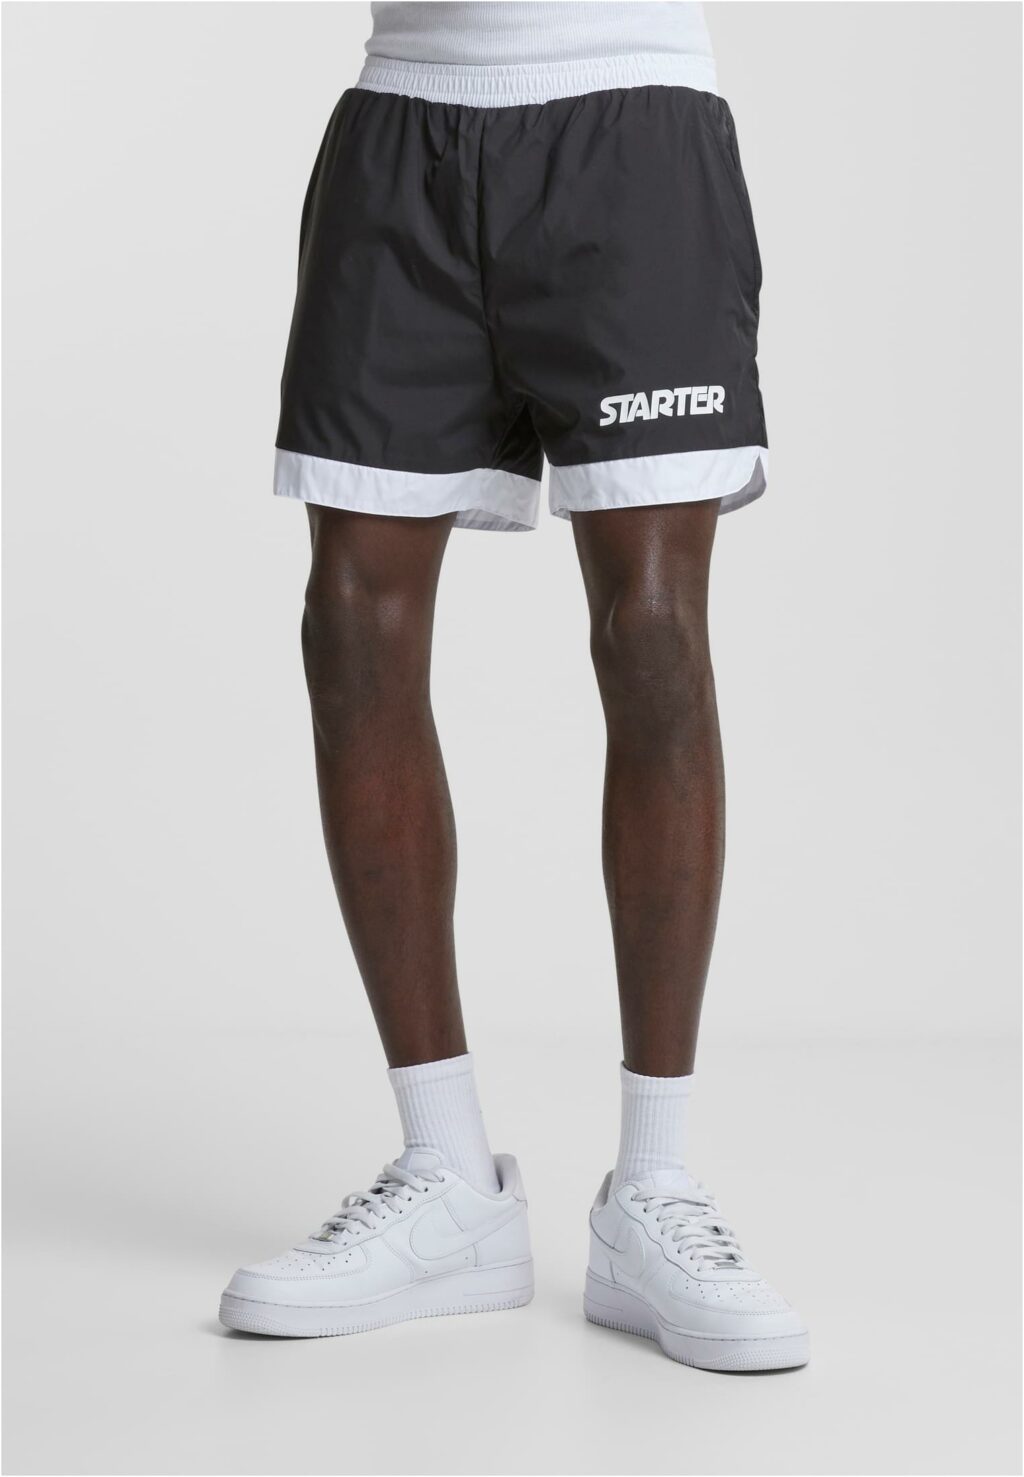 Starter Retro Shorts black ST375